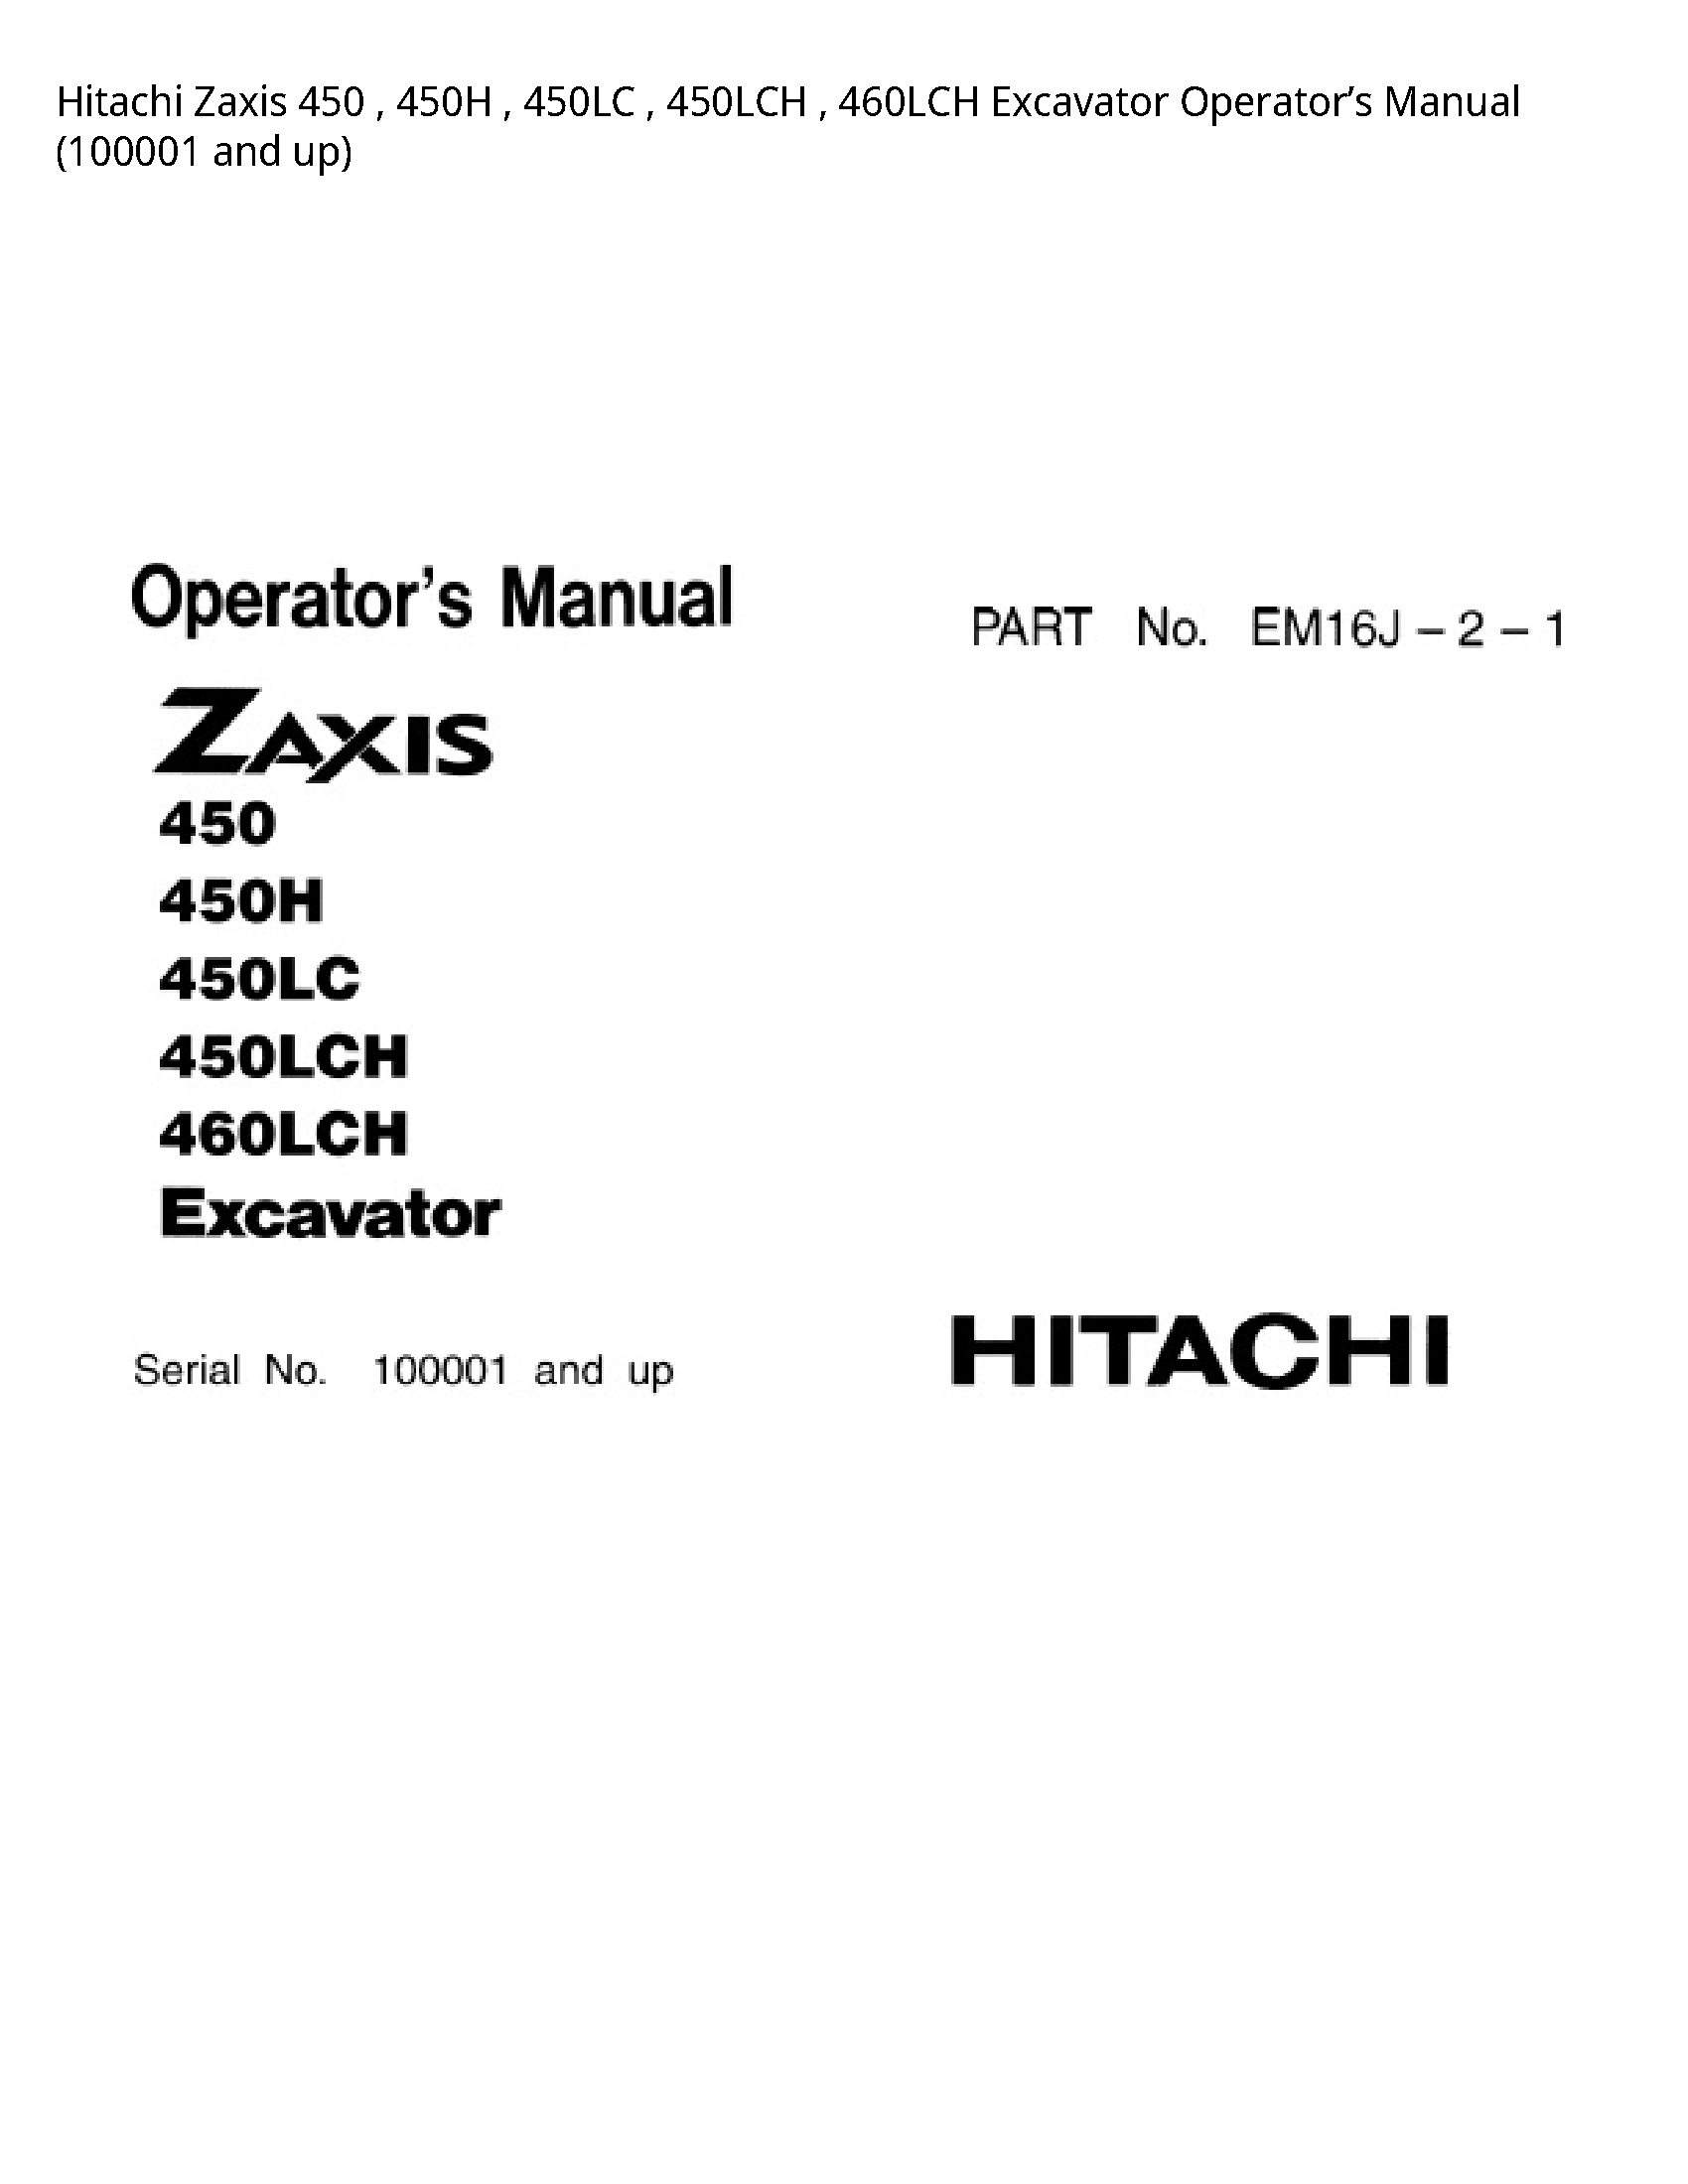 Hitachi 450 Zaxis Excavator Operator’s manual